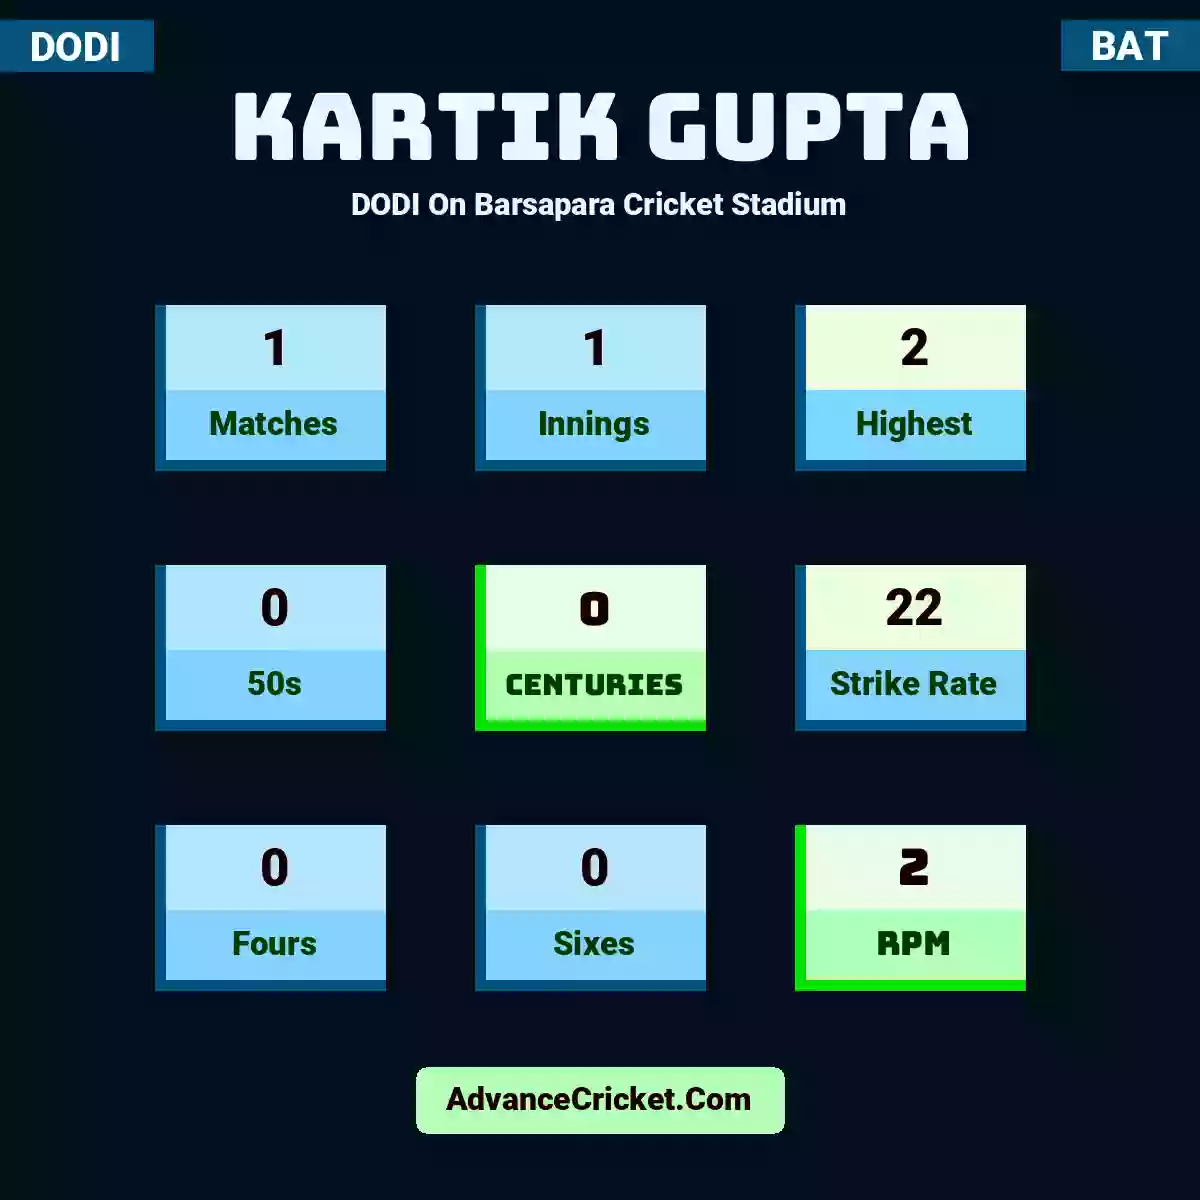 Kartik Gupta DODI  On Barsapara Cricket Stadium, Kartik Gupta played 1 matches, scored 2 runs as highest, 0 half-centuries, and 0 centuries, with a strike rate of 22. K.Gupta hit 0 fours and 0 sixes, with an RPM of 2.